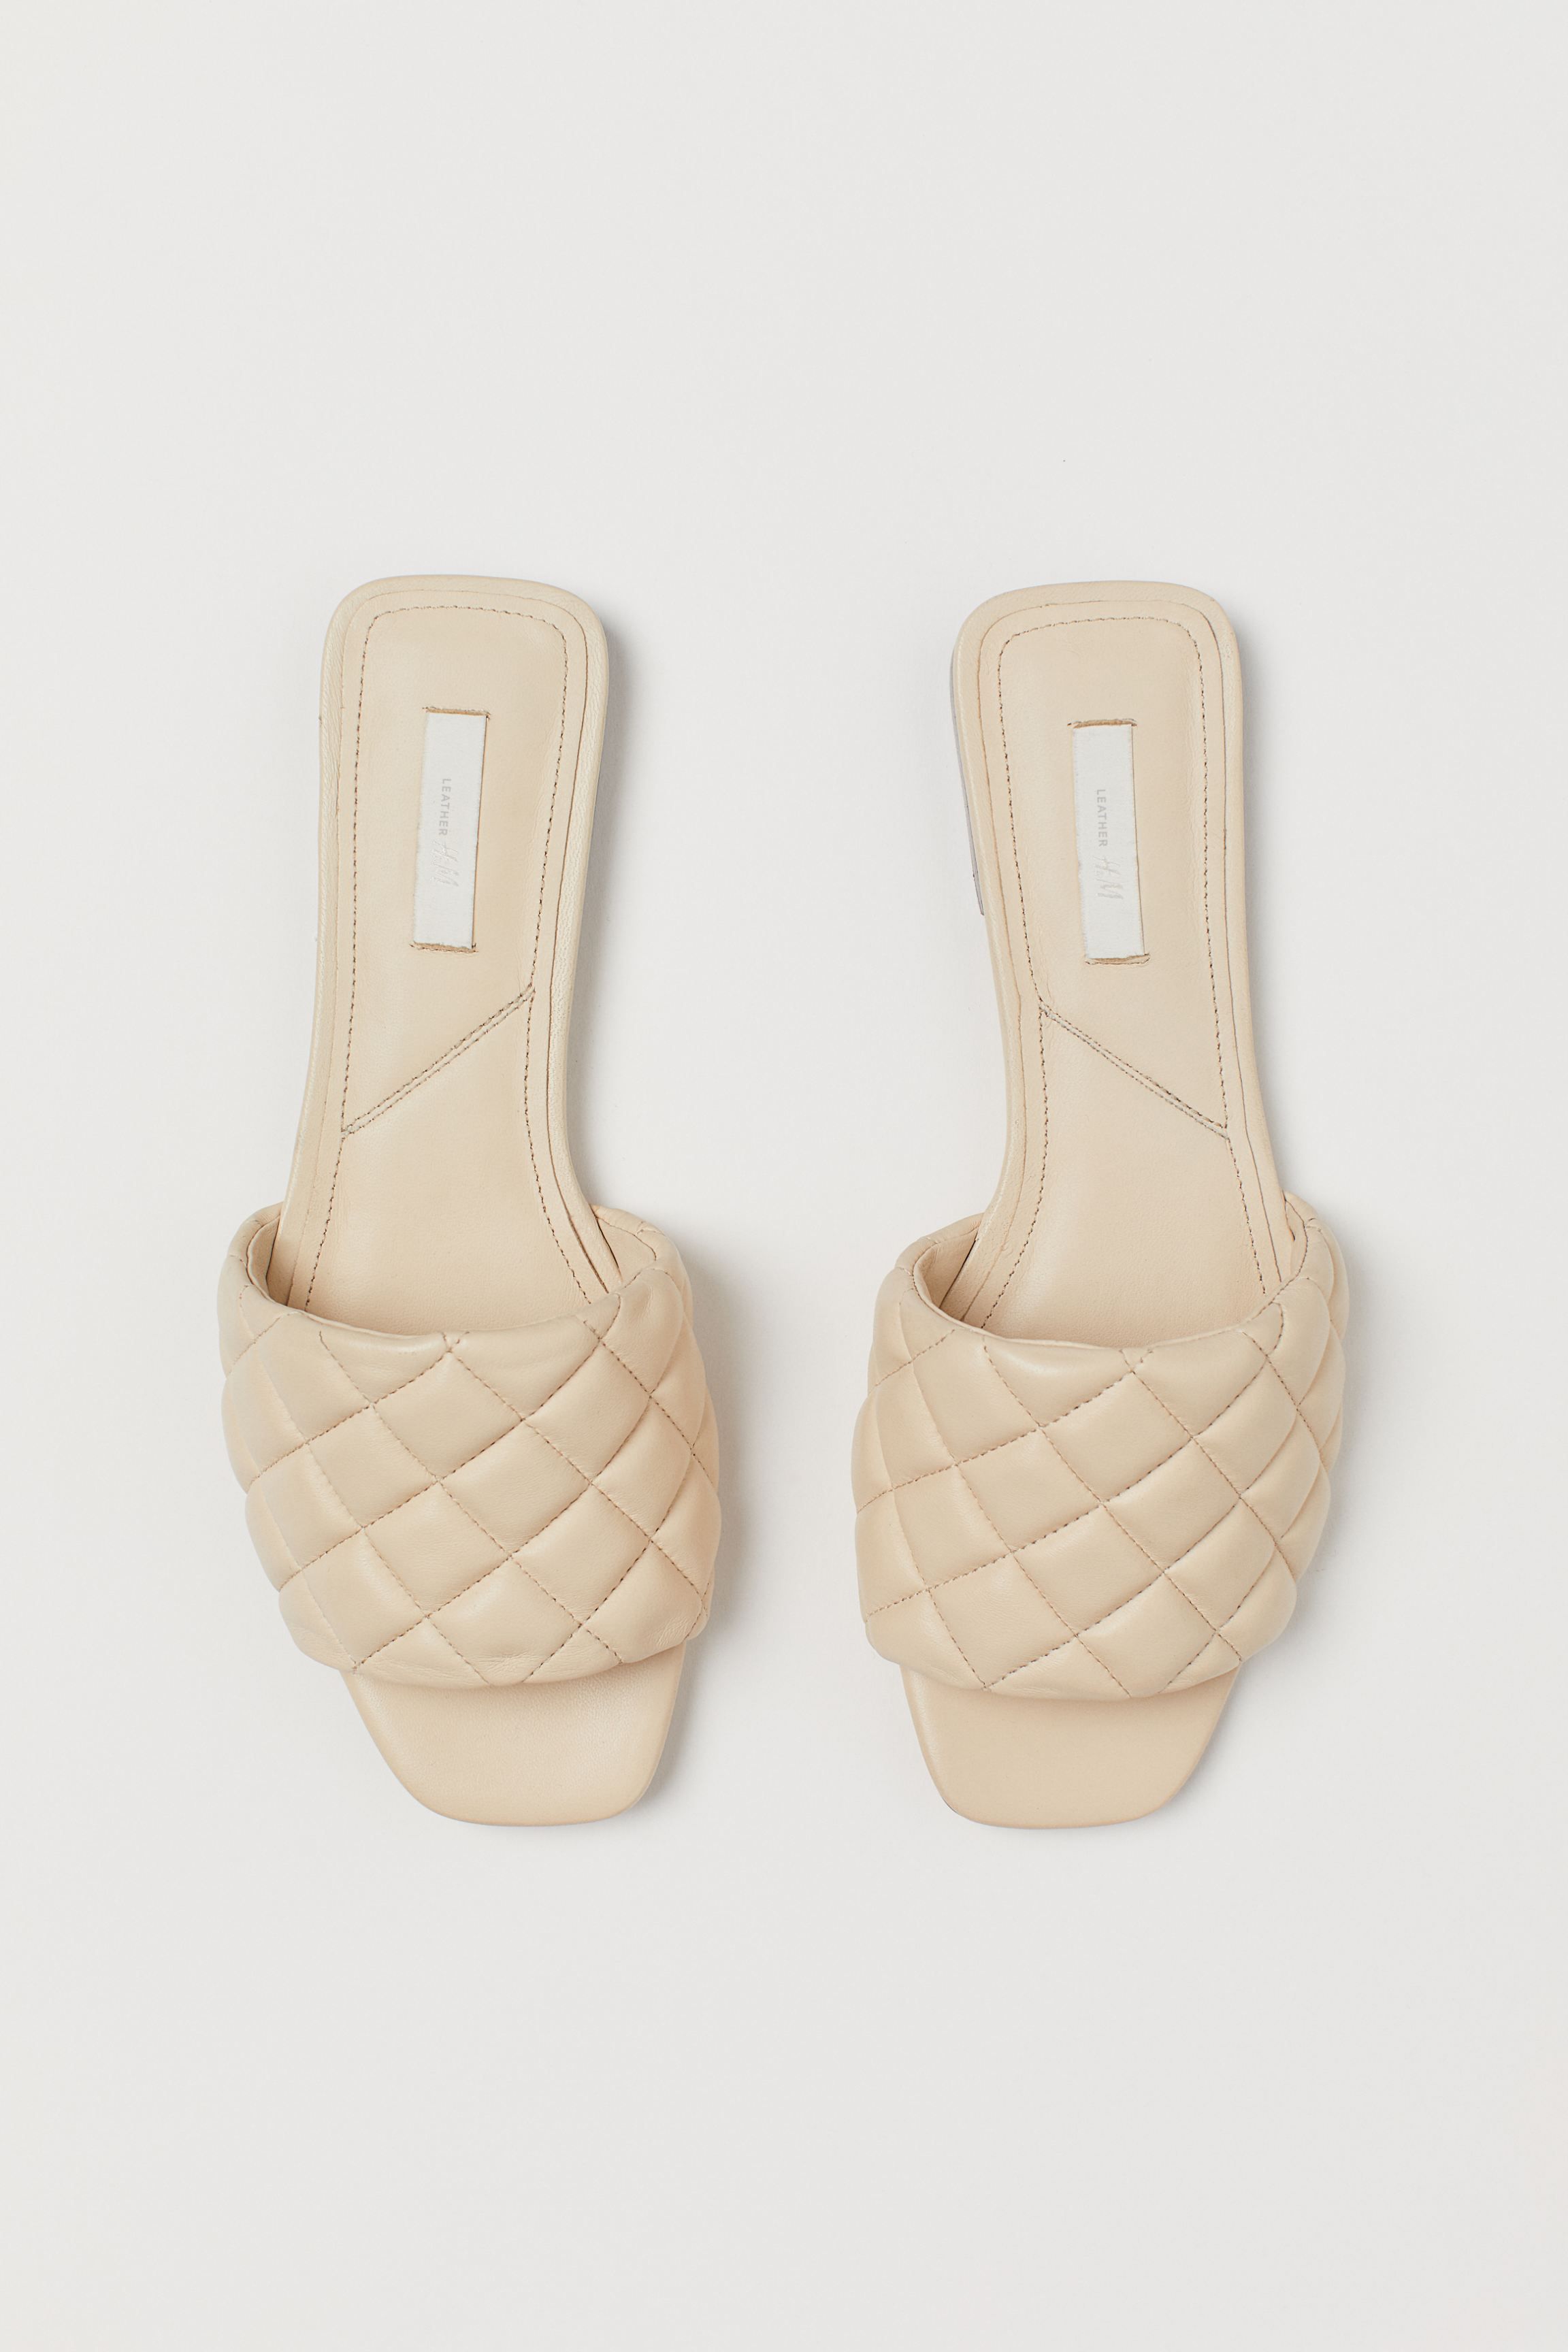 h&m summer sandals